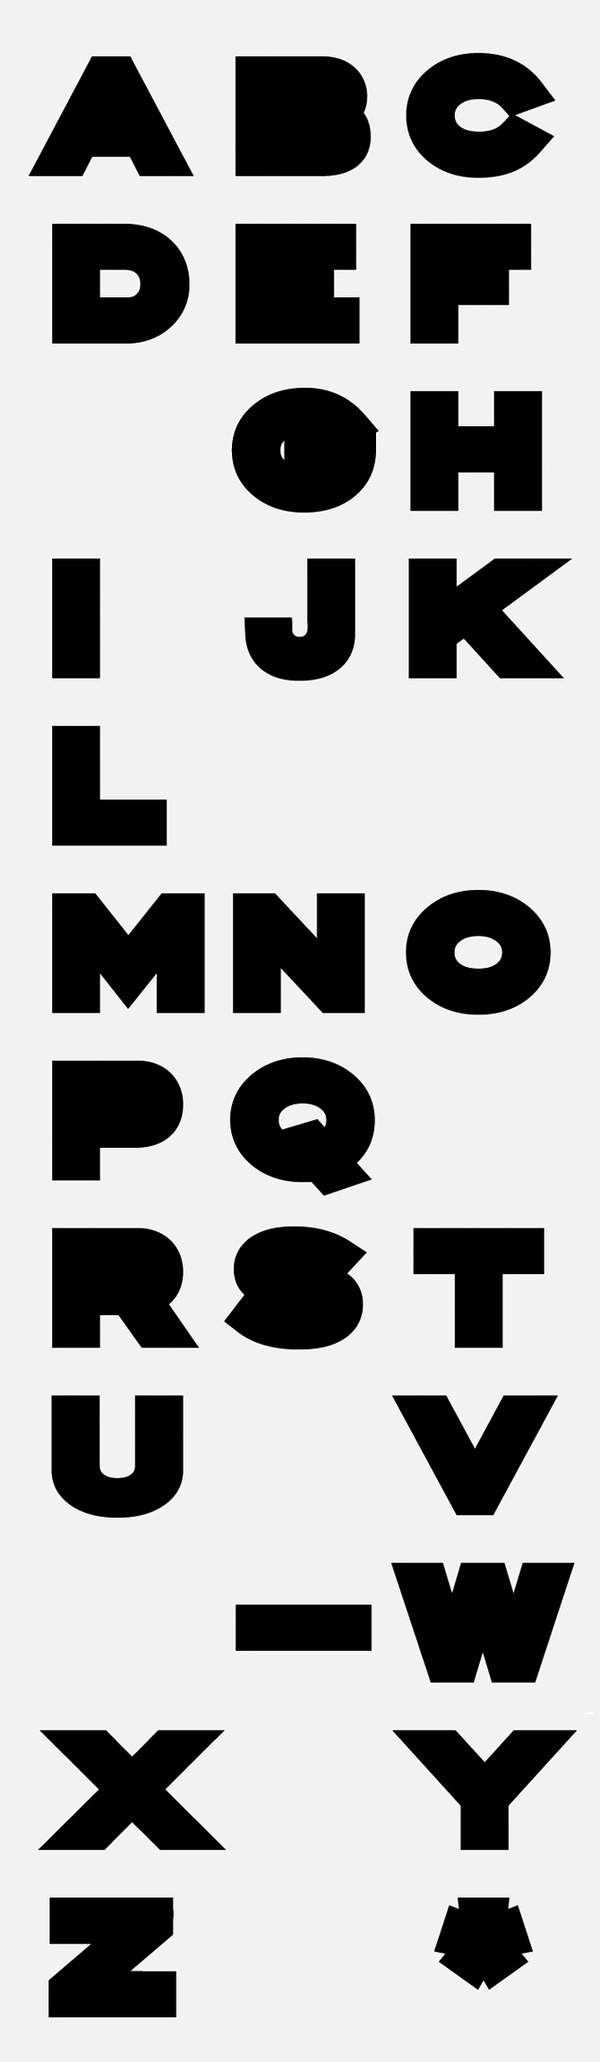 Typography inspiration example #151: Portfolio of Vincent Lowe #typography